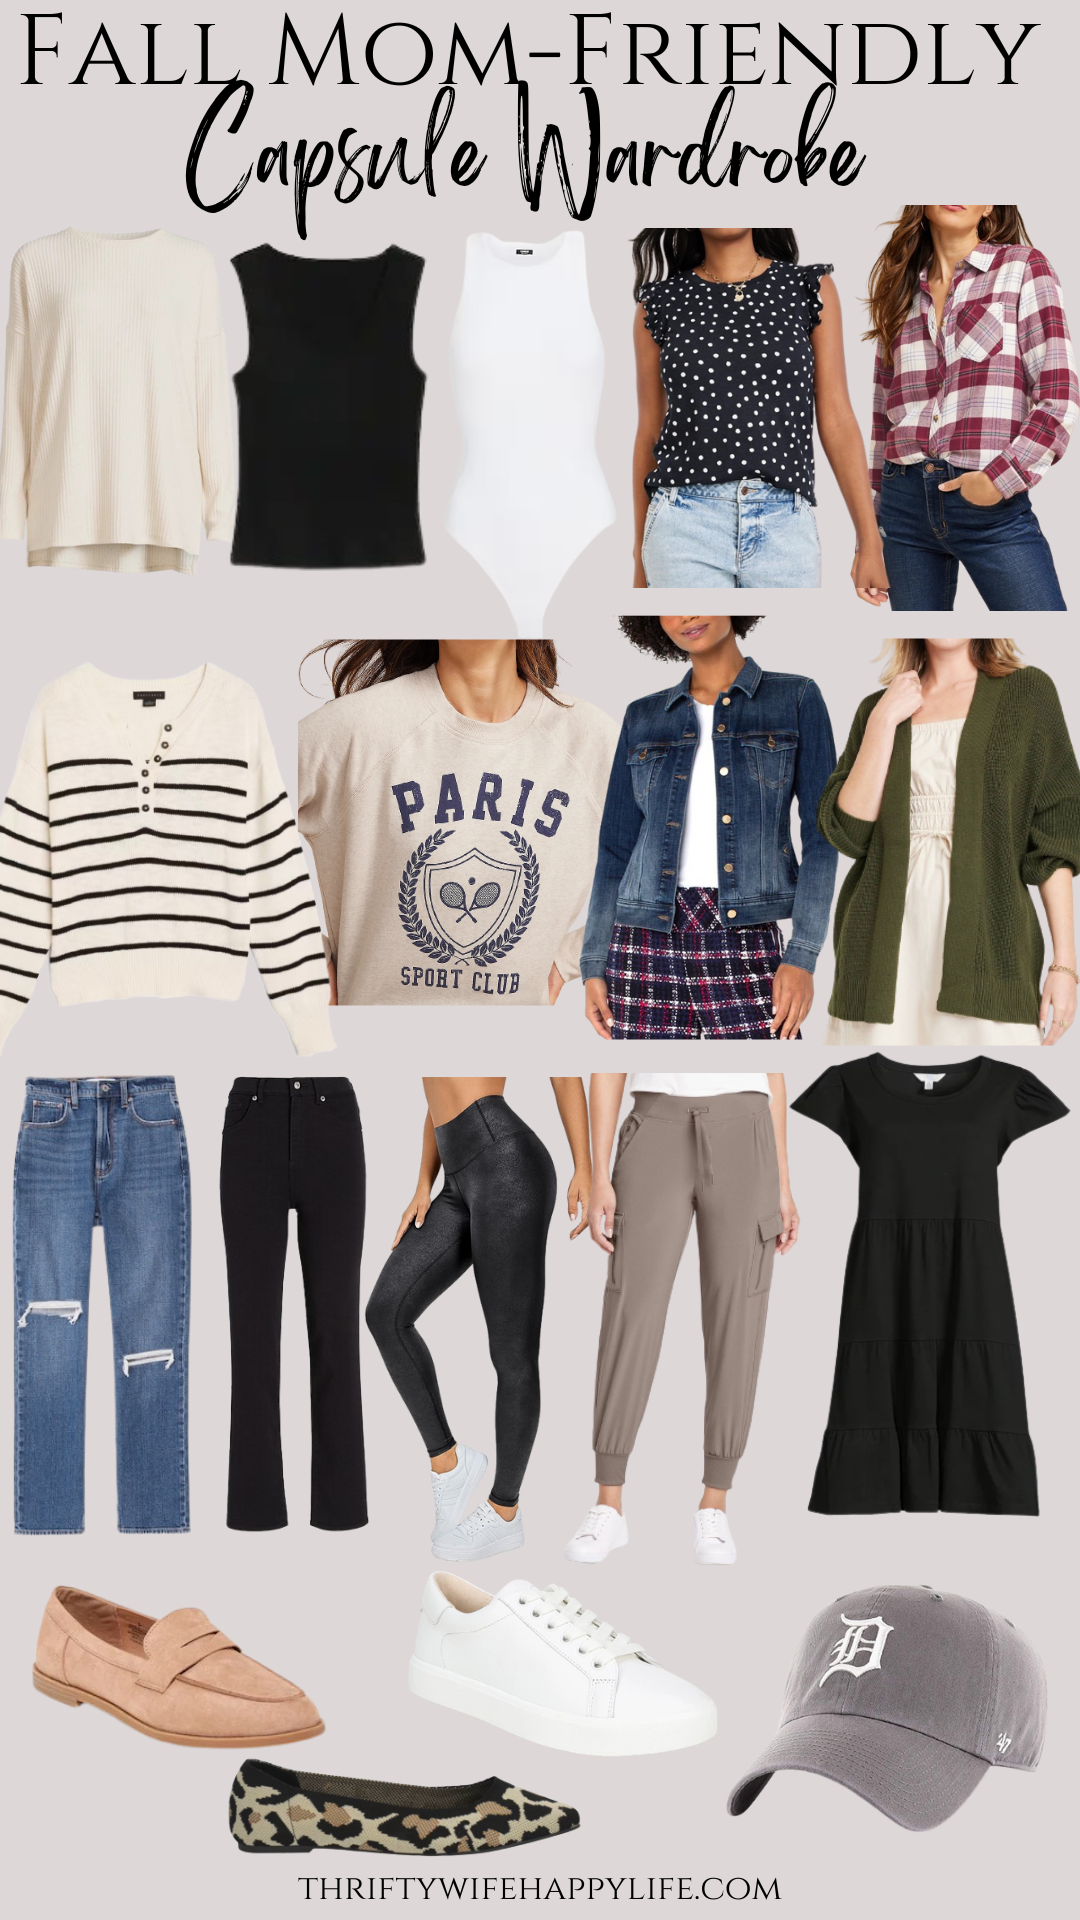 Le Fashion: Plaid Pants are a Versatile Pick for Fall